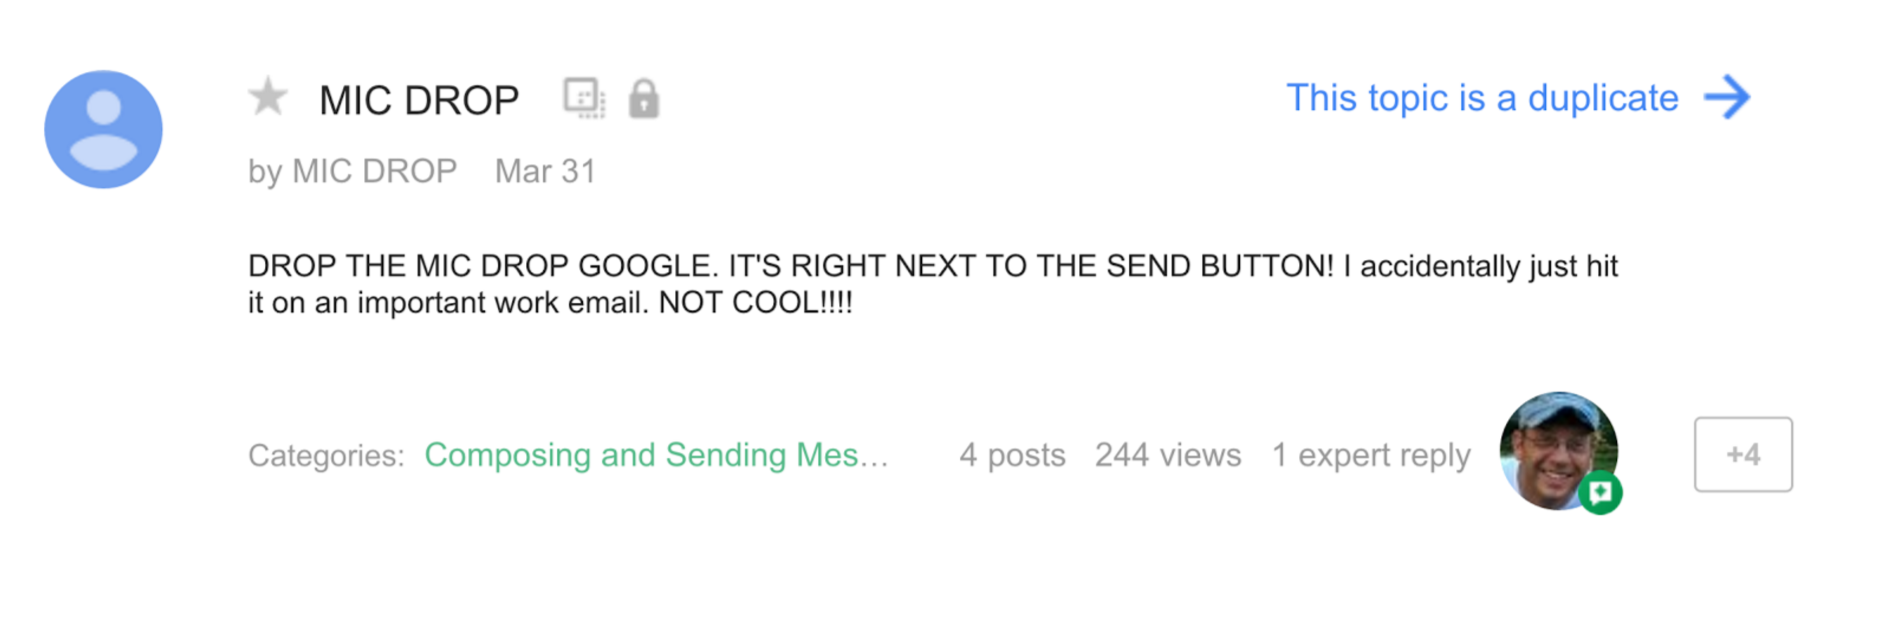 A complaint of Google's mic drop prank.